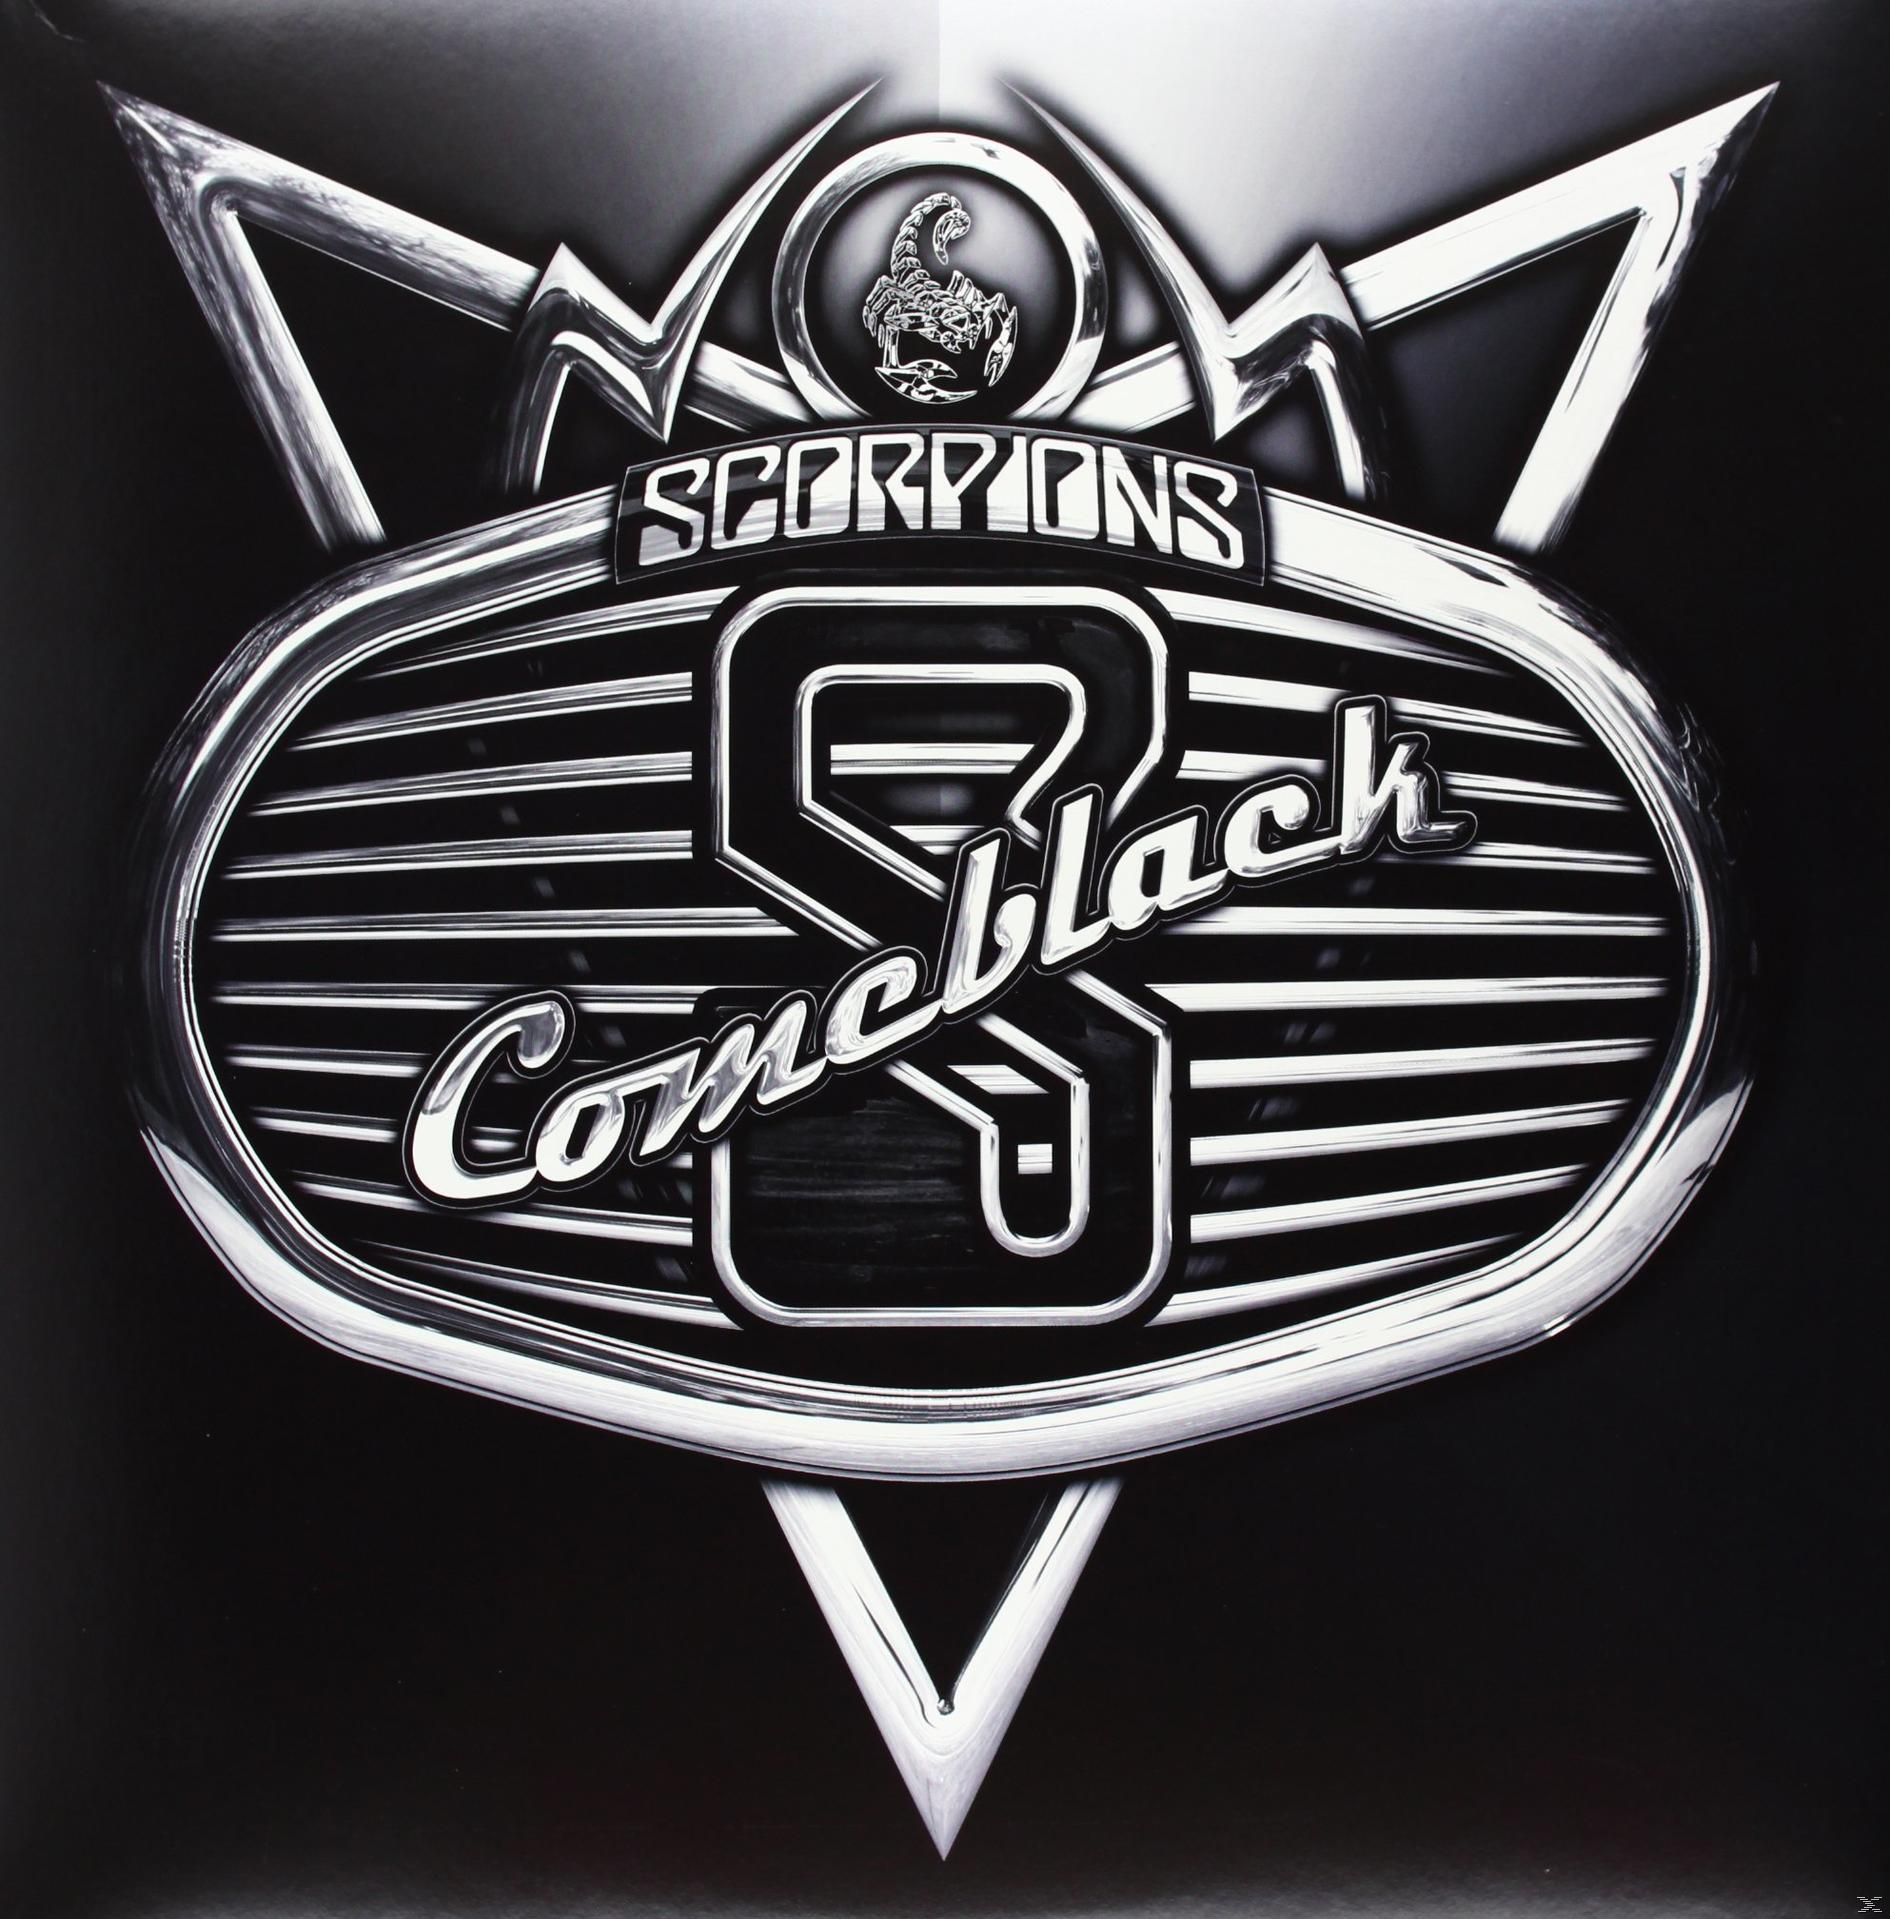 - (Vinyl) - Scorpions Comeblack